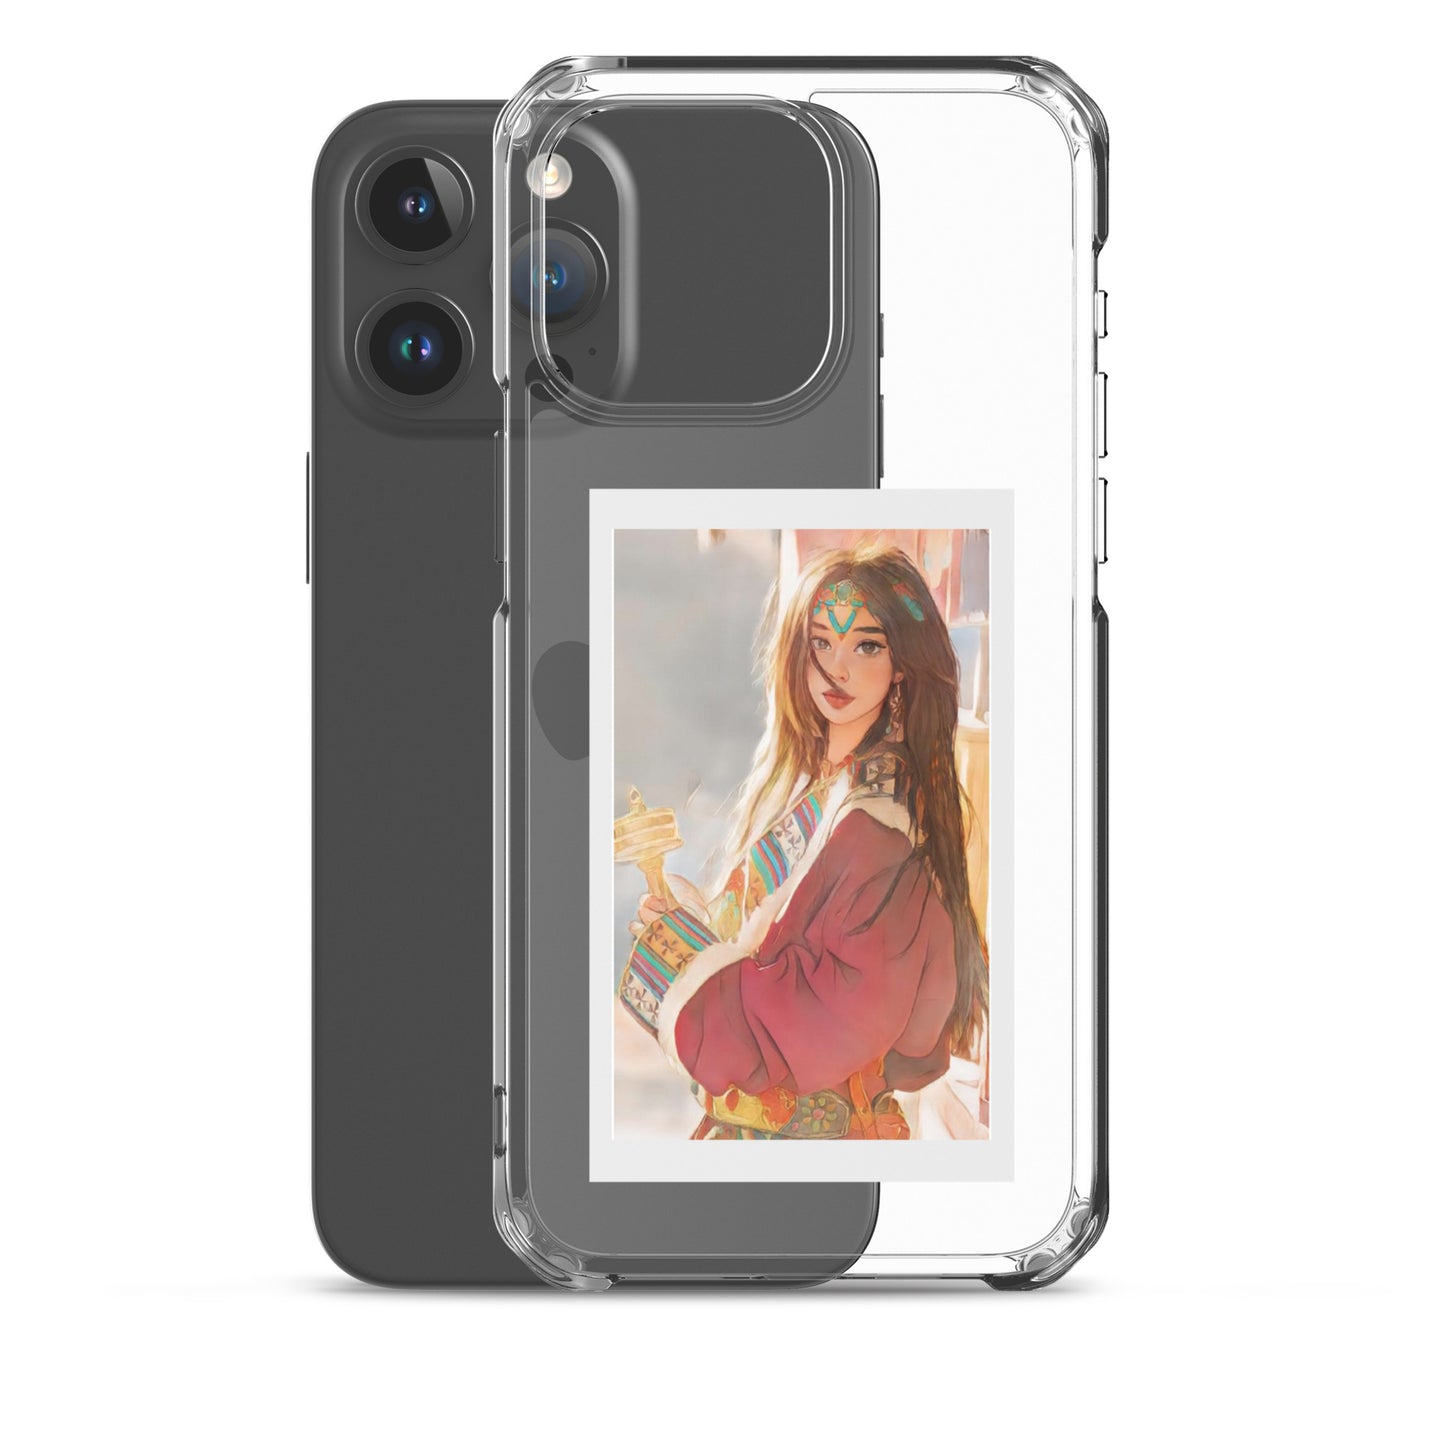 Tibetan Premium iPhone case-Tibetan-Tibetan Phone Case-Tibetan Culture-Tibetan Cartoon mobile case-Tibetan lady - Tibetan girl printed premium clear mobile case